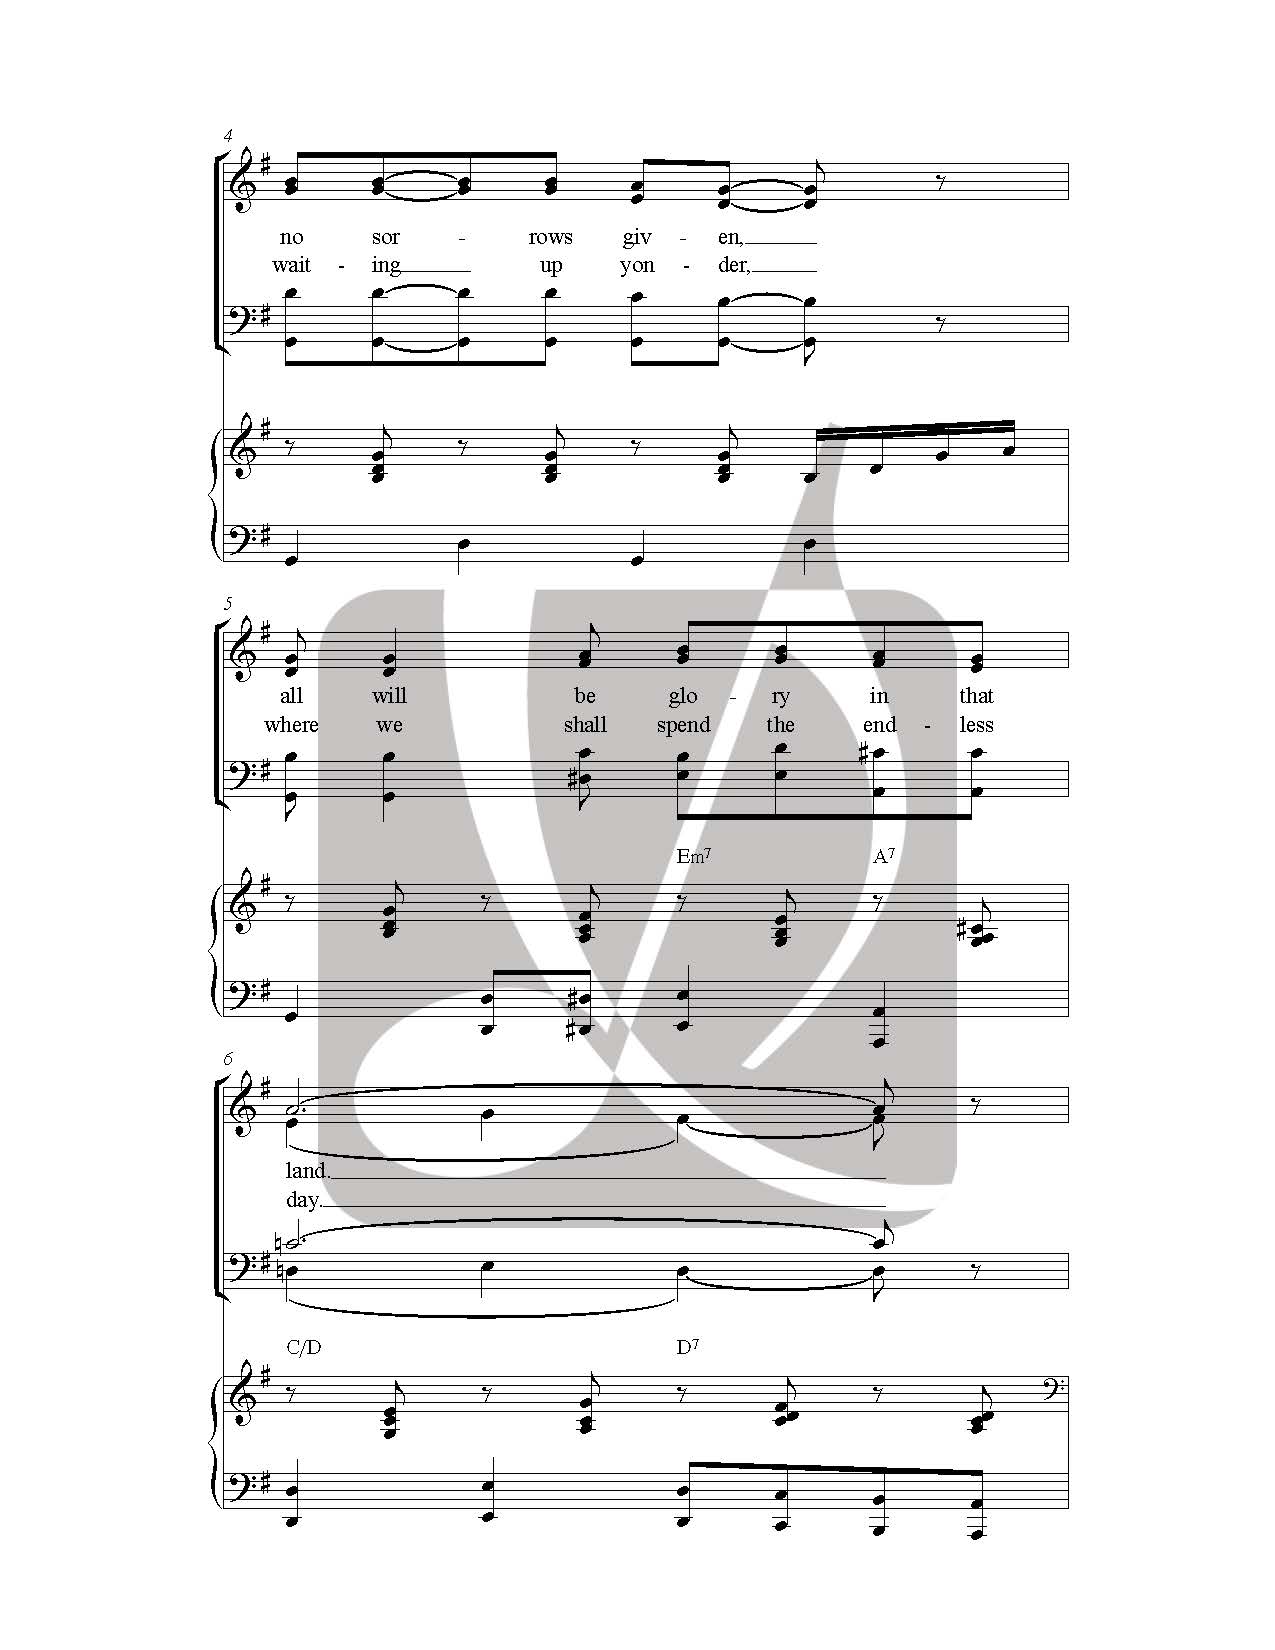 Tears in Heaven (Sheet Music) Pop Choral Series (8202070) by Hal Leonard